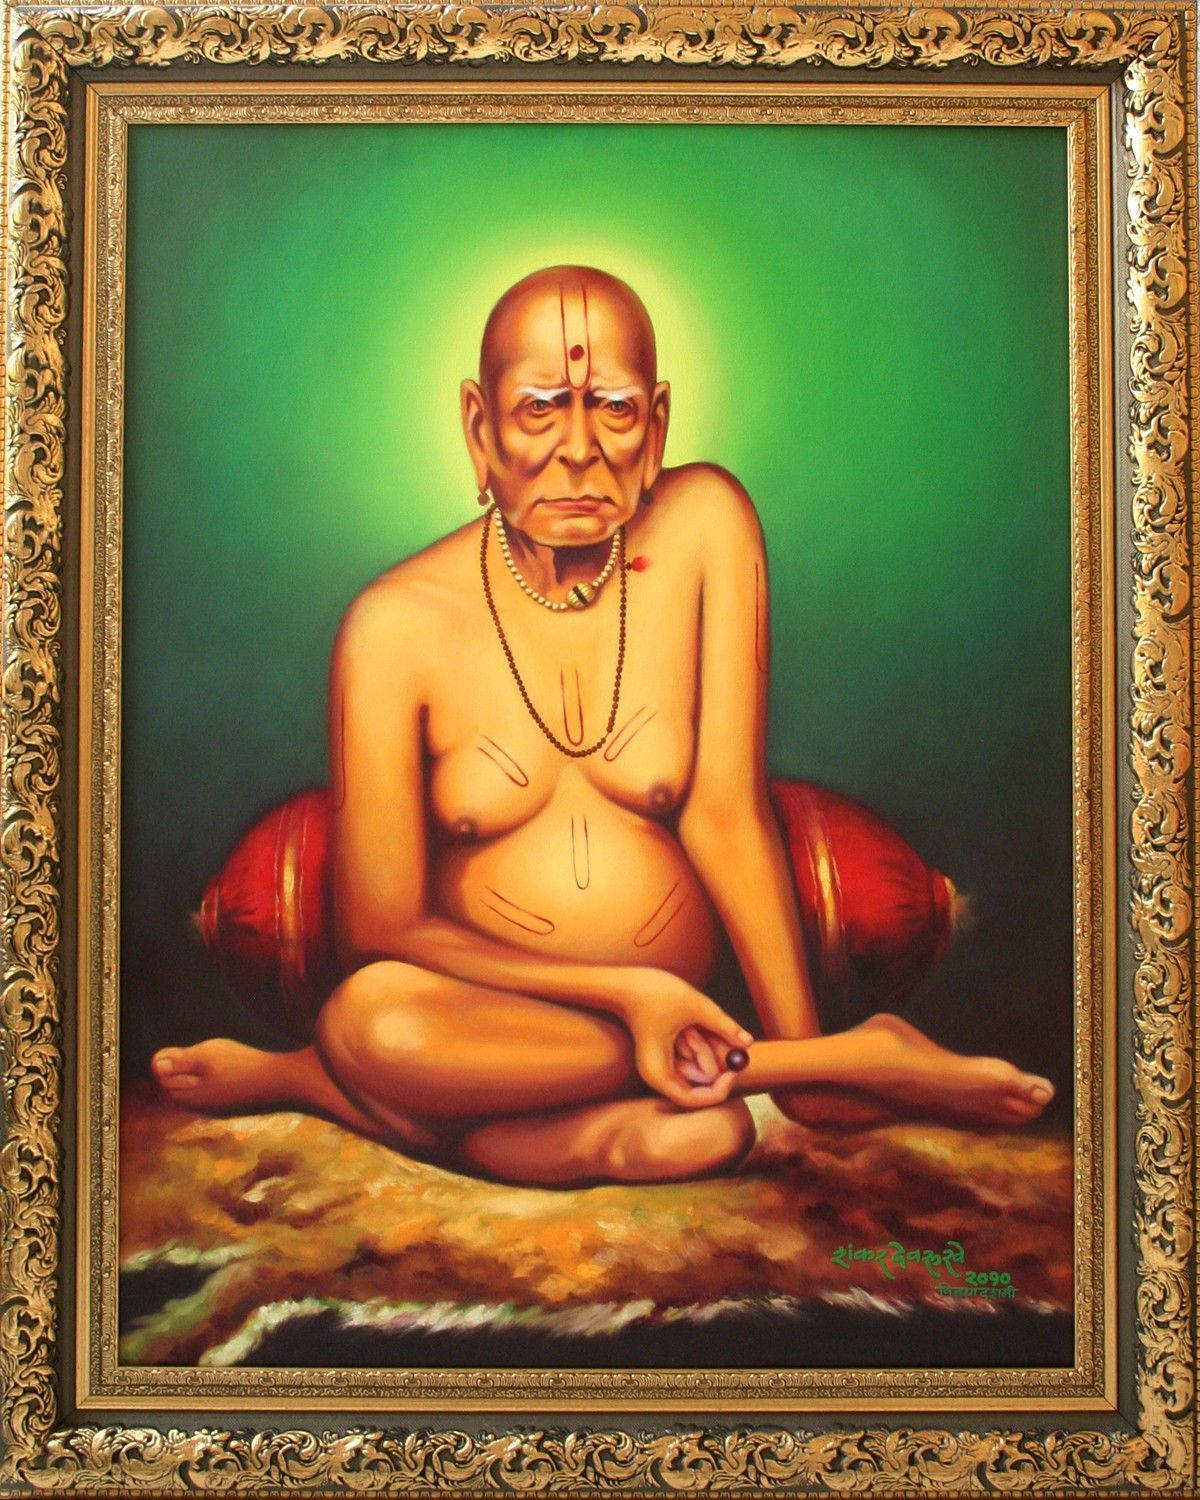 Shri Swami Samarth Framed With Green Background Wallpaper